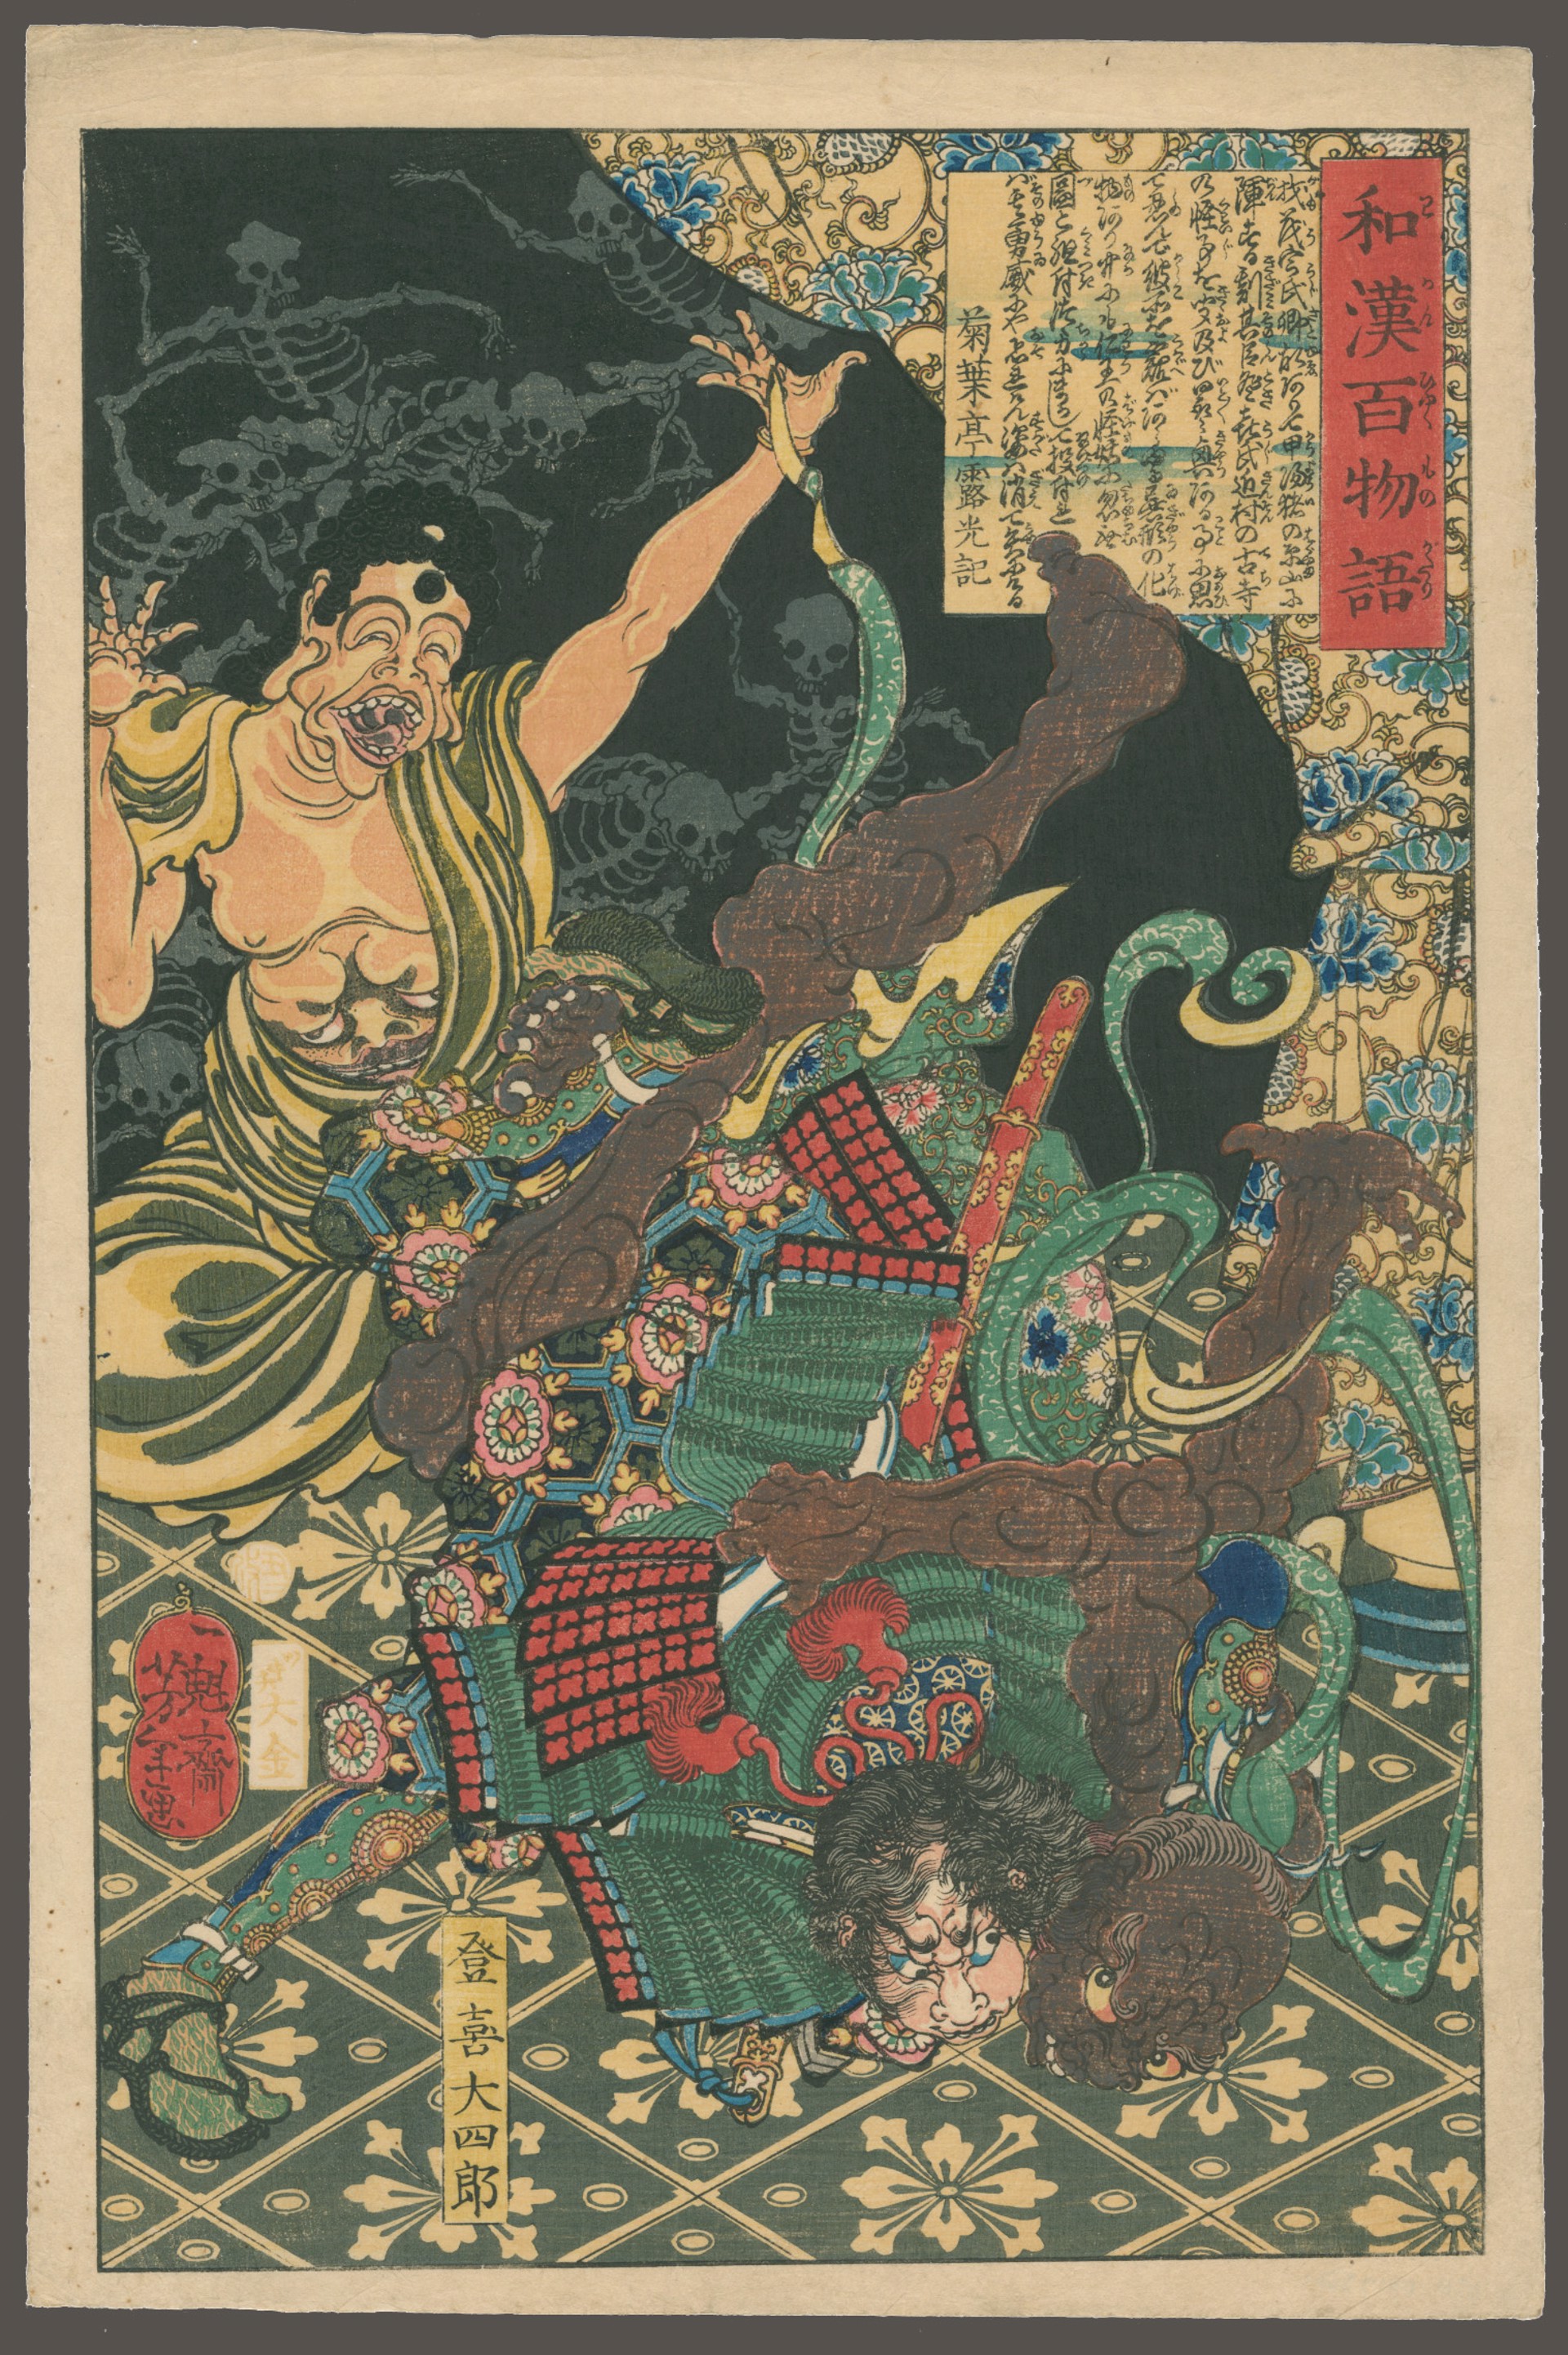 #8 Toki Daishiro Fighting a Demon 100 Ghost Stories of China and Japan by Yoshitoshi